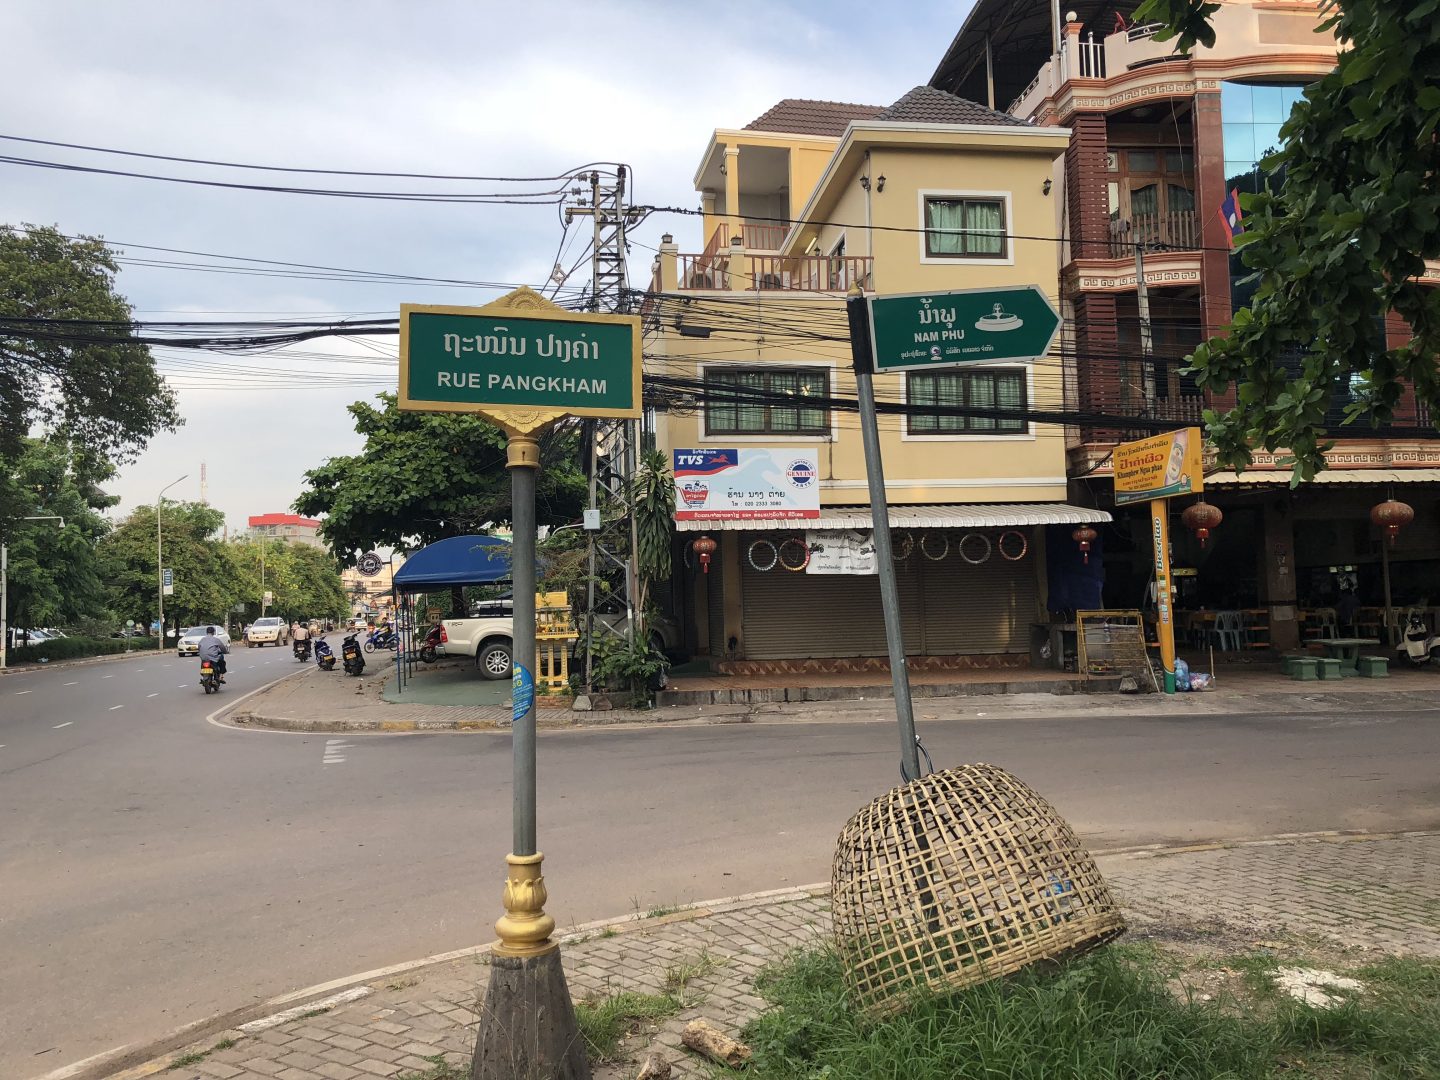 Tera Hotel Vientiane Laos Near Rue Pangkham